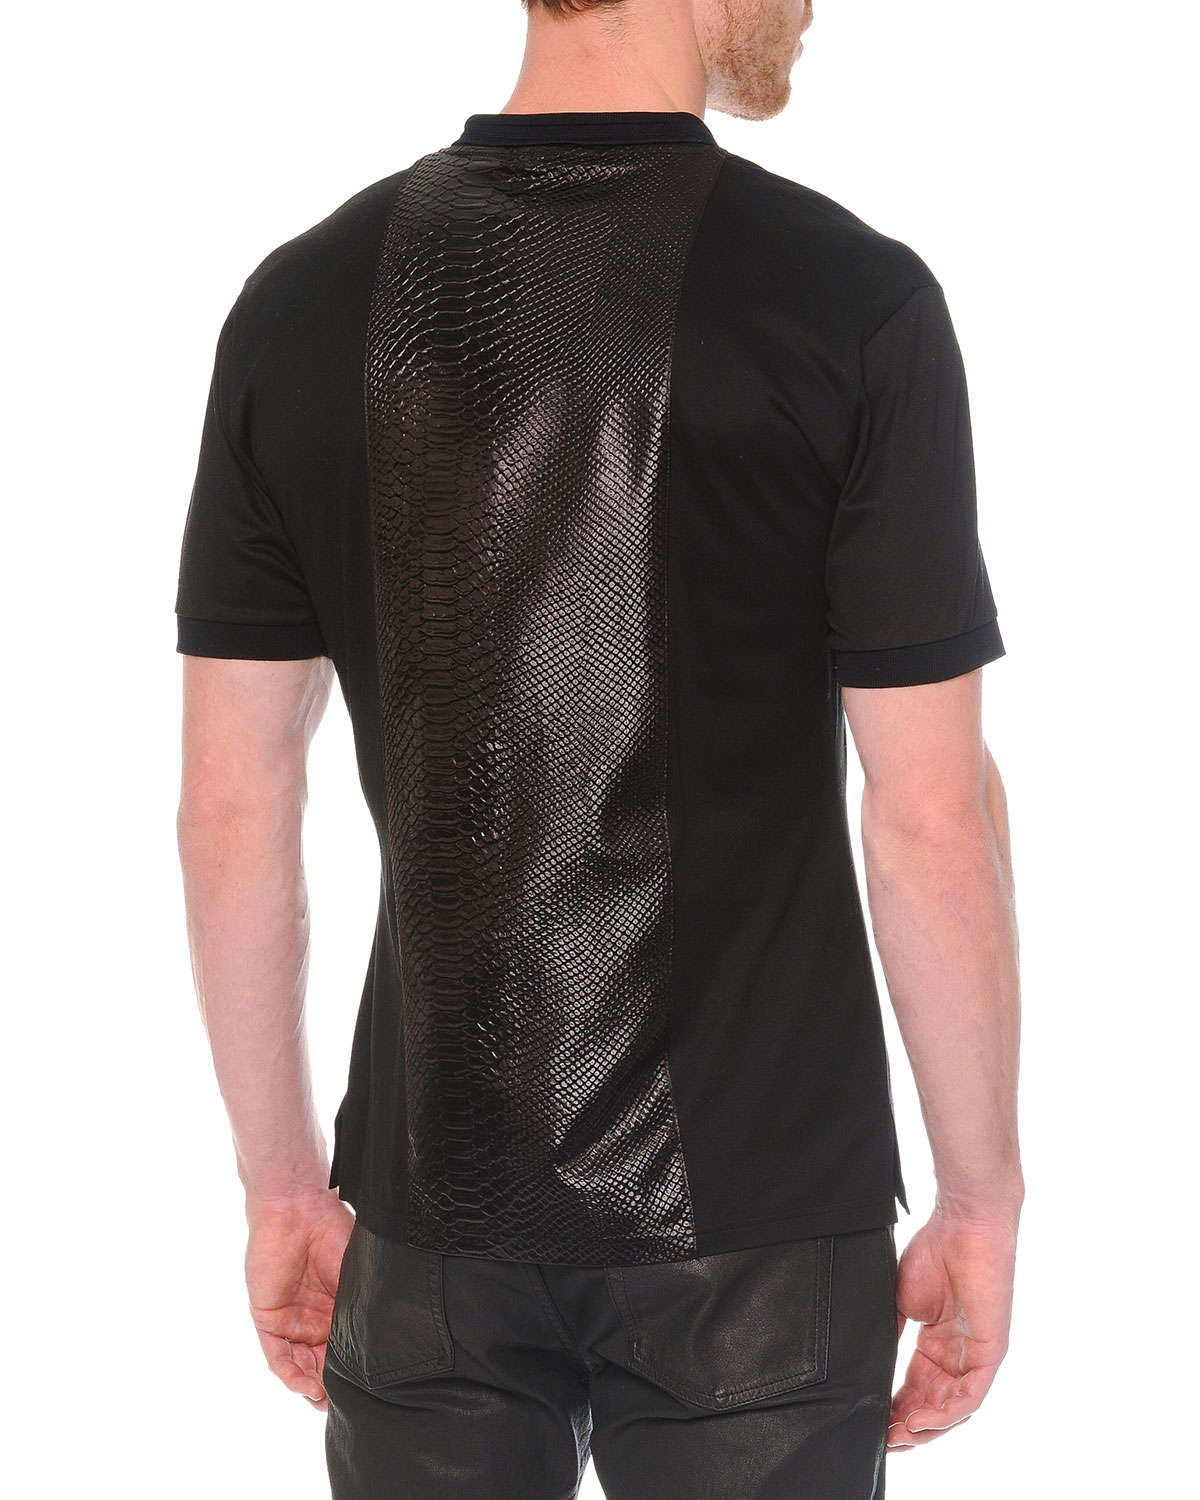 Alexander McQueen Knit Python-print Polo Shirt in Black for Men - Lyst